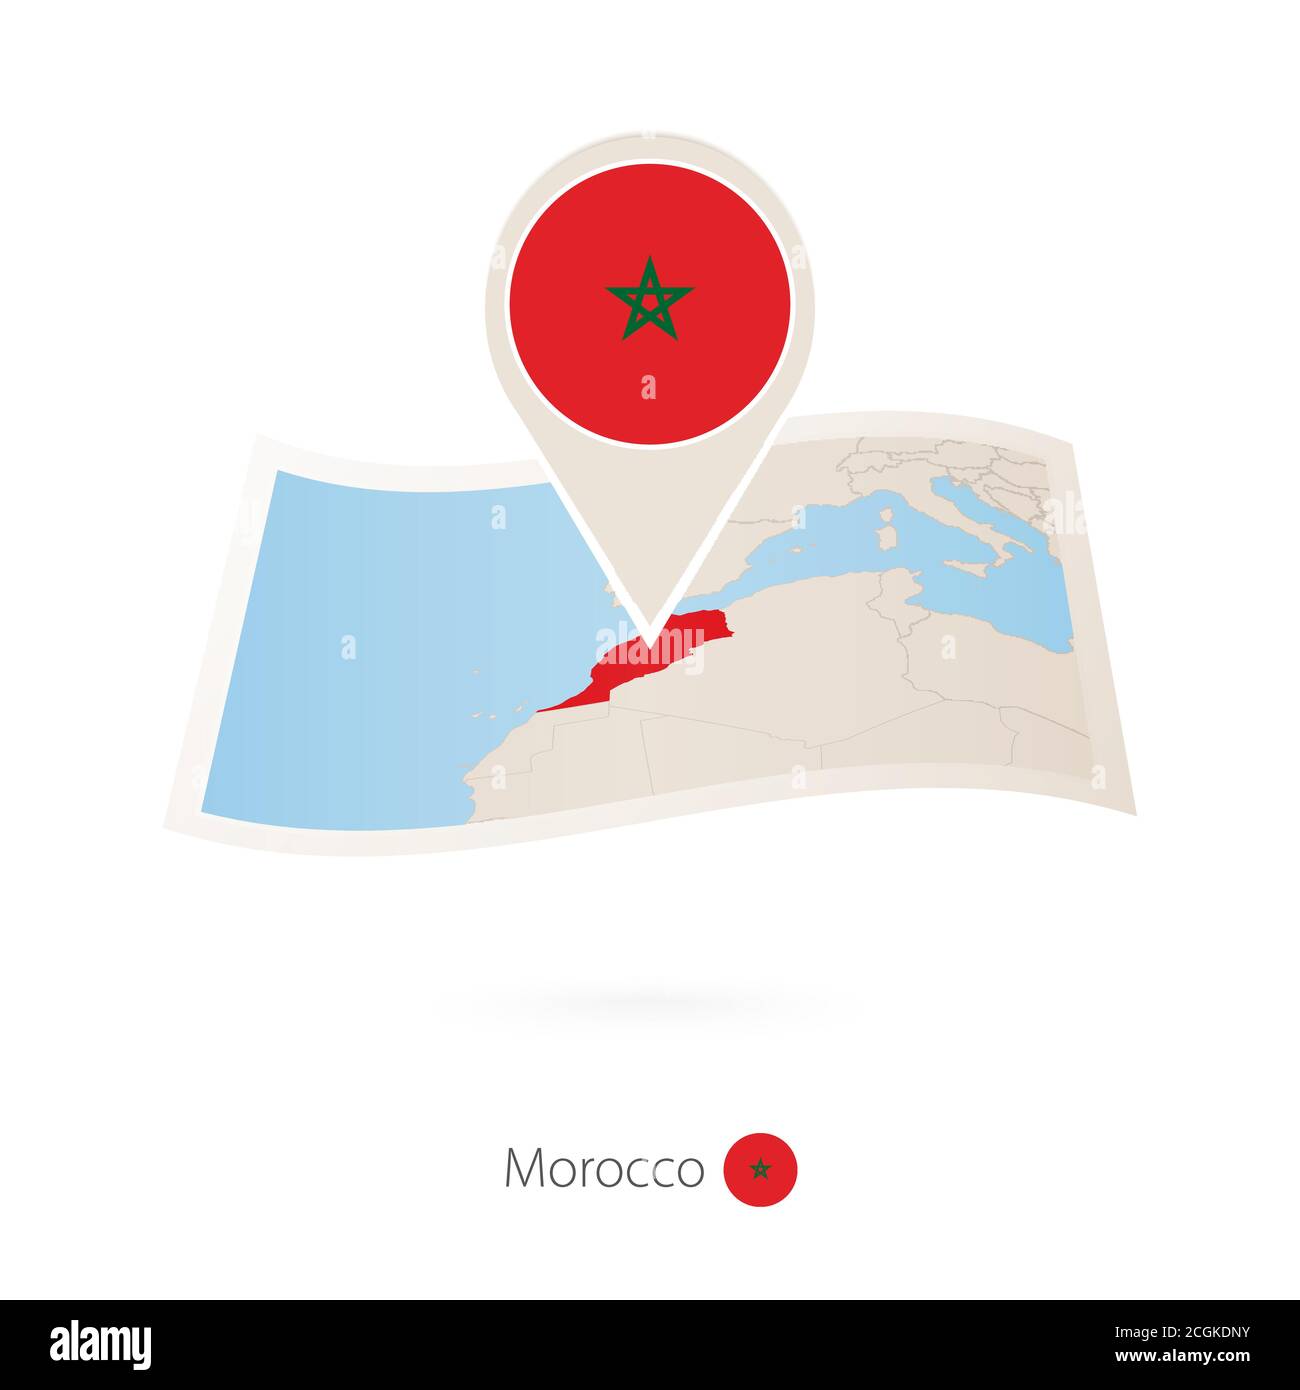 Pin on Marruecos